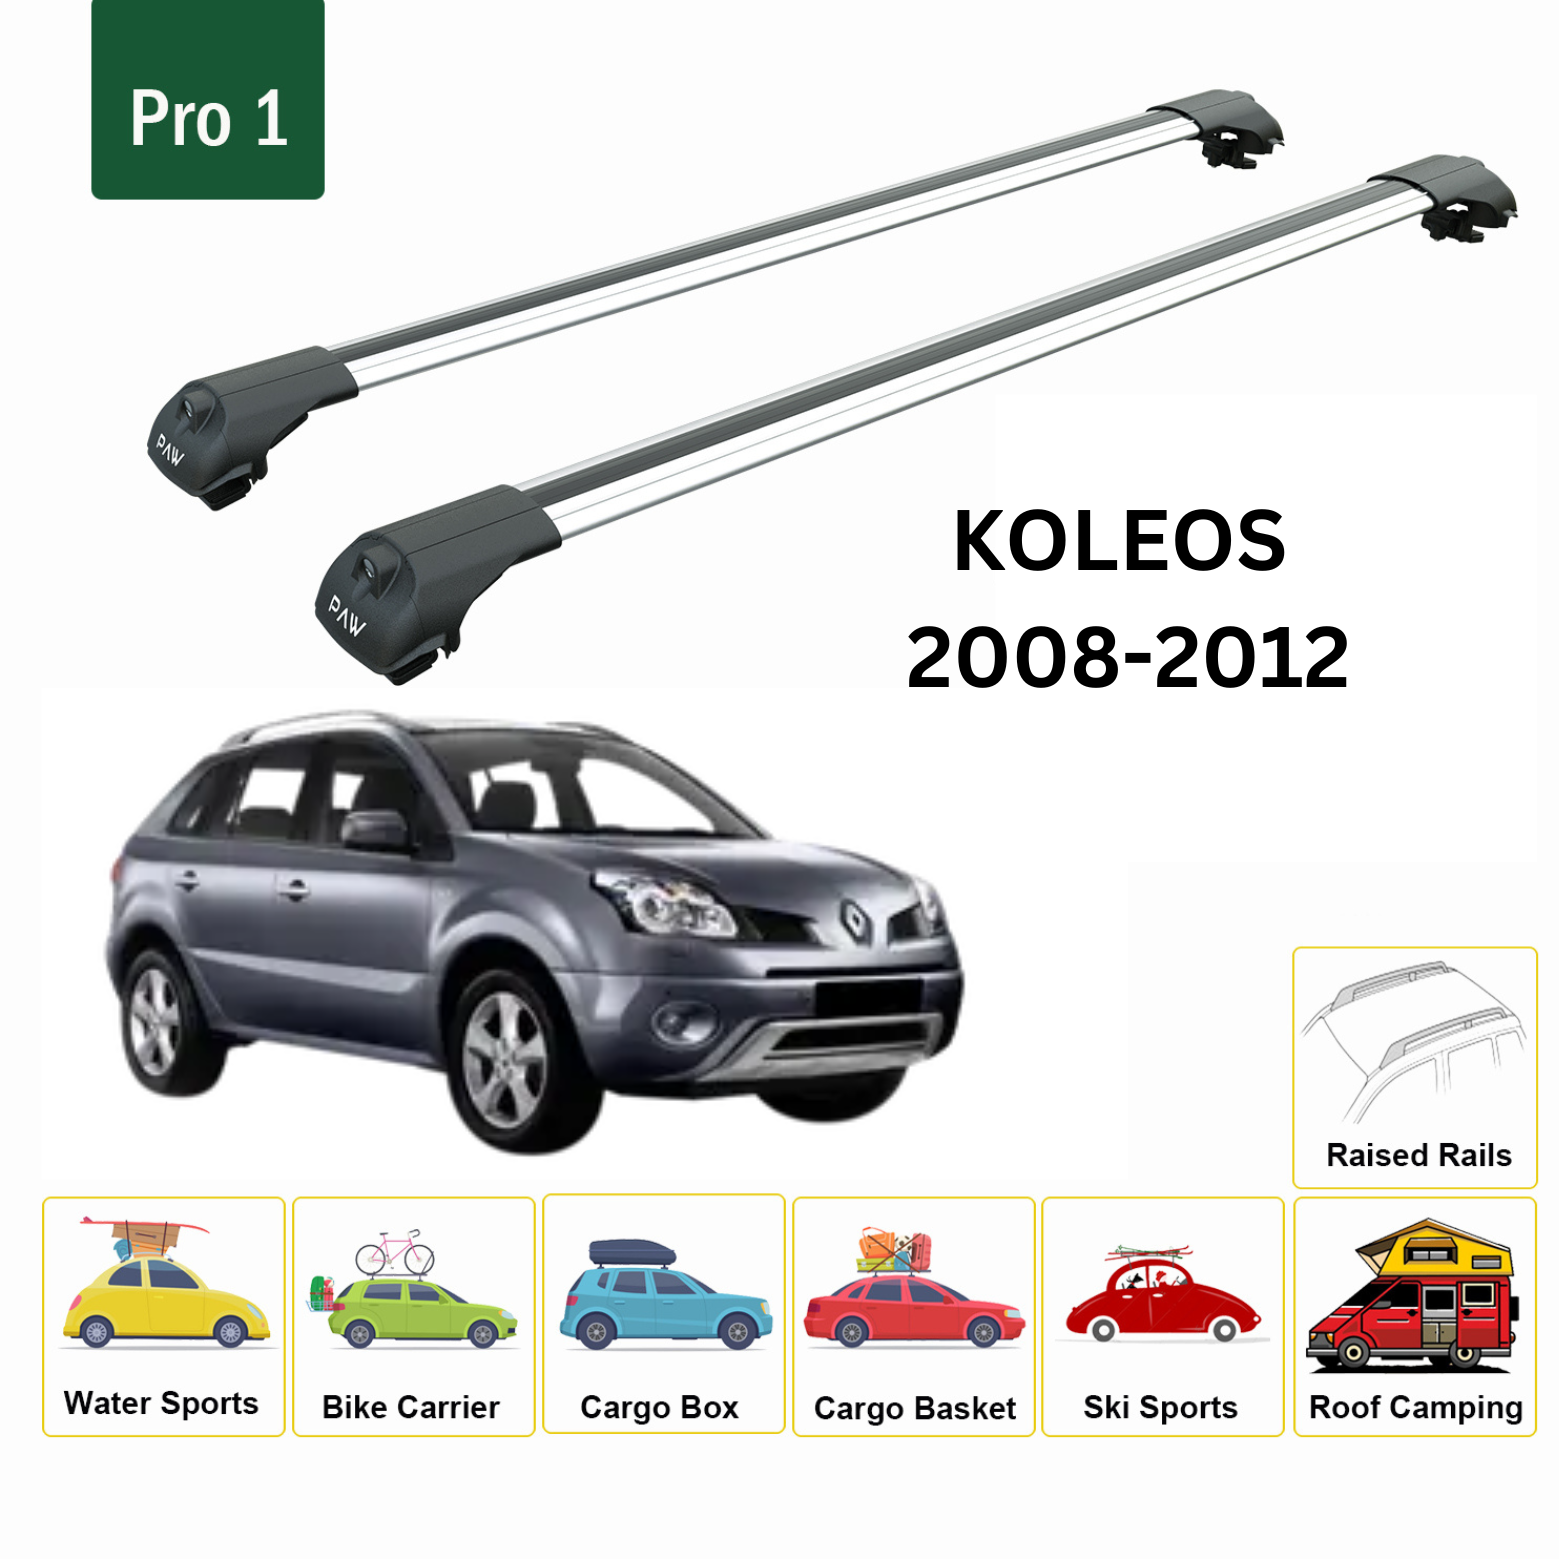 For Renault Koleos 2008-2012 Roof Rack System, Aluminium Cross Bar, Metal Bracket, Normal Roof, Silver